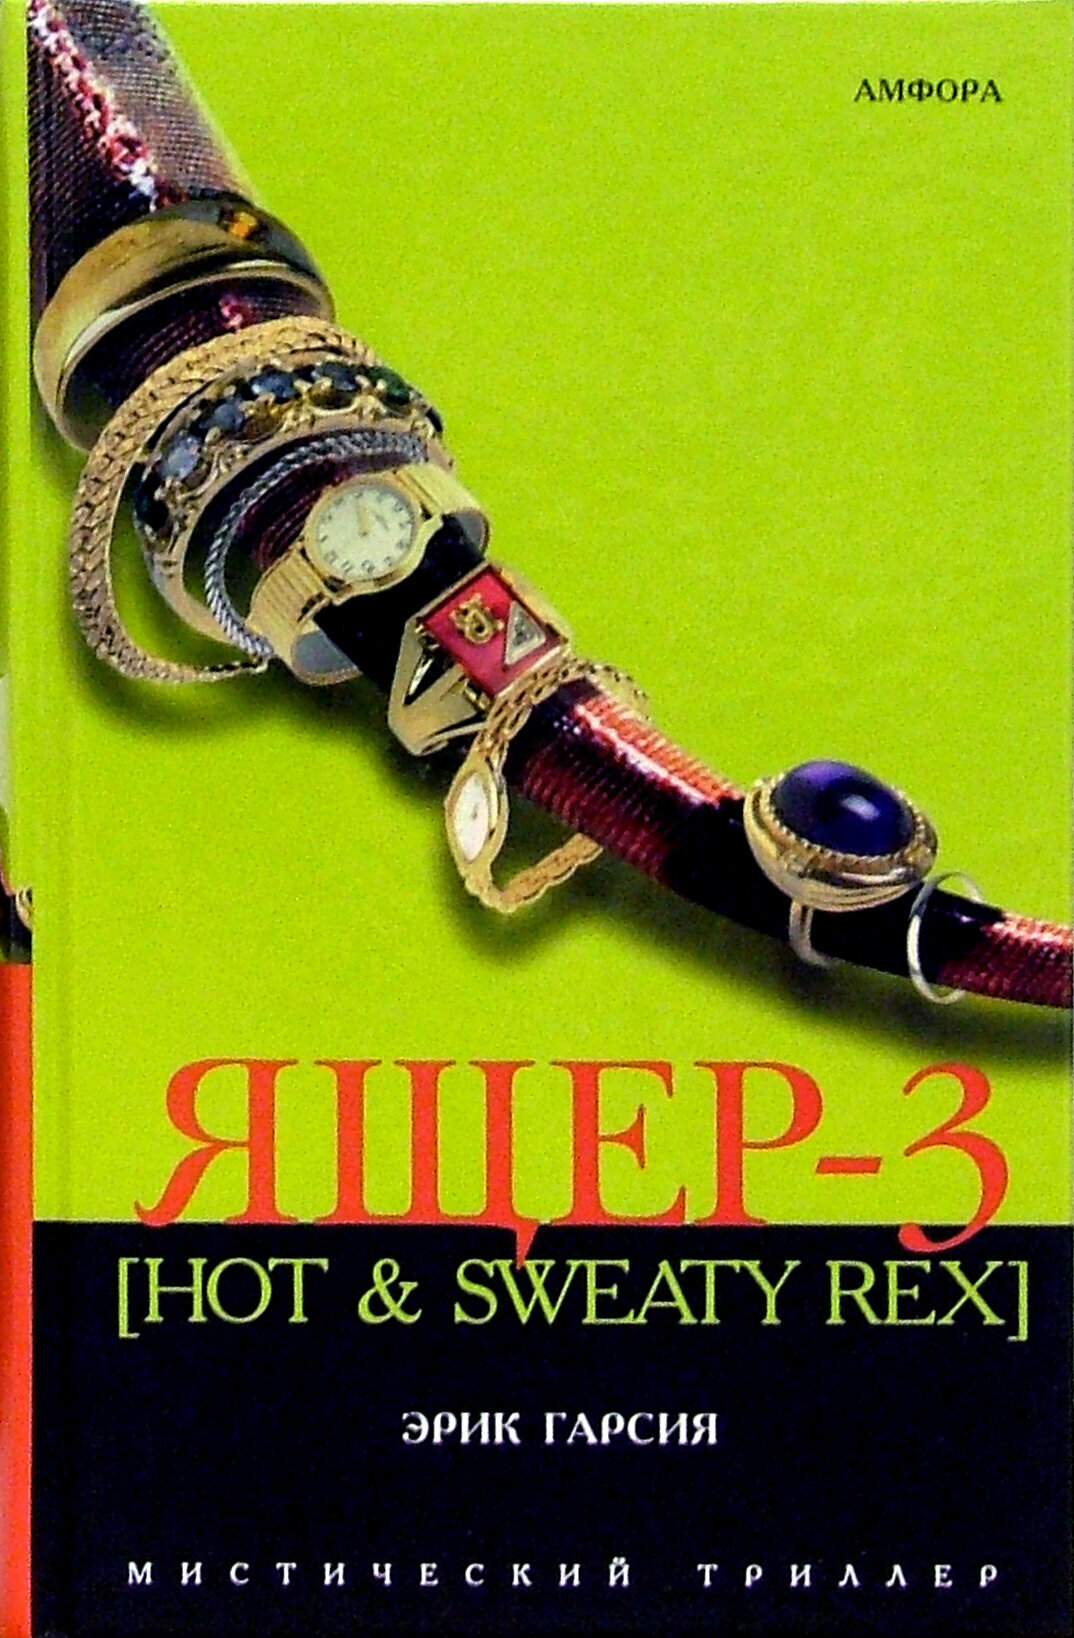 Ящер-3 [Hot & Sweaty Rex]. Мафиозная мистерия - фото №2